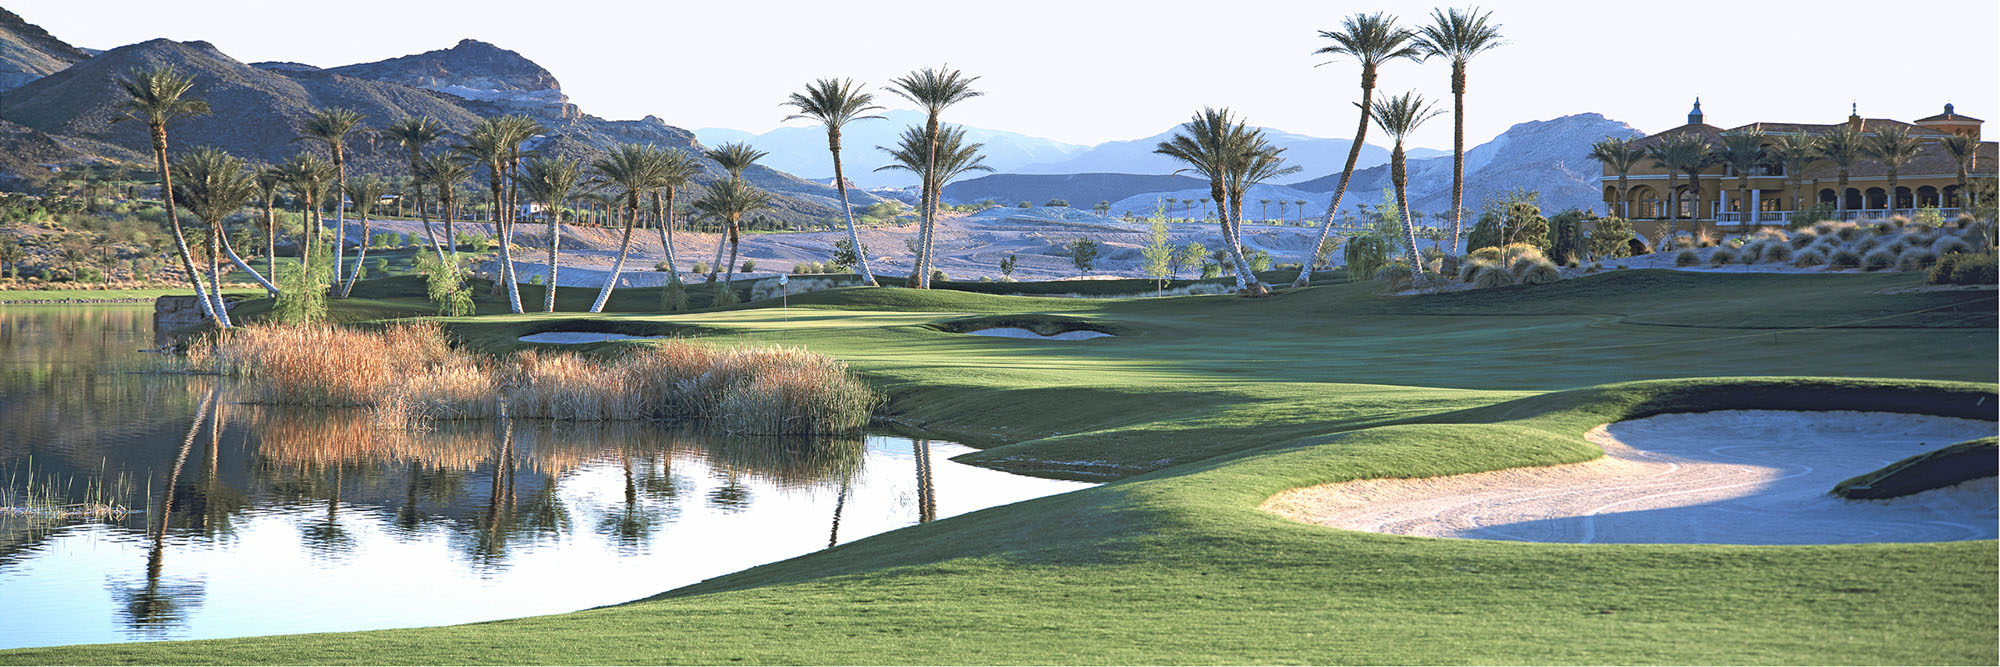 Golf Course Image - Reflection Bay No. 9